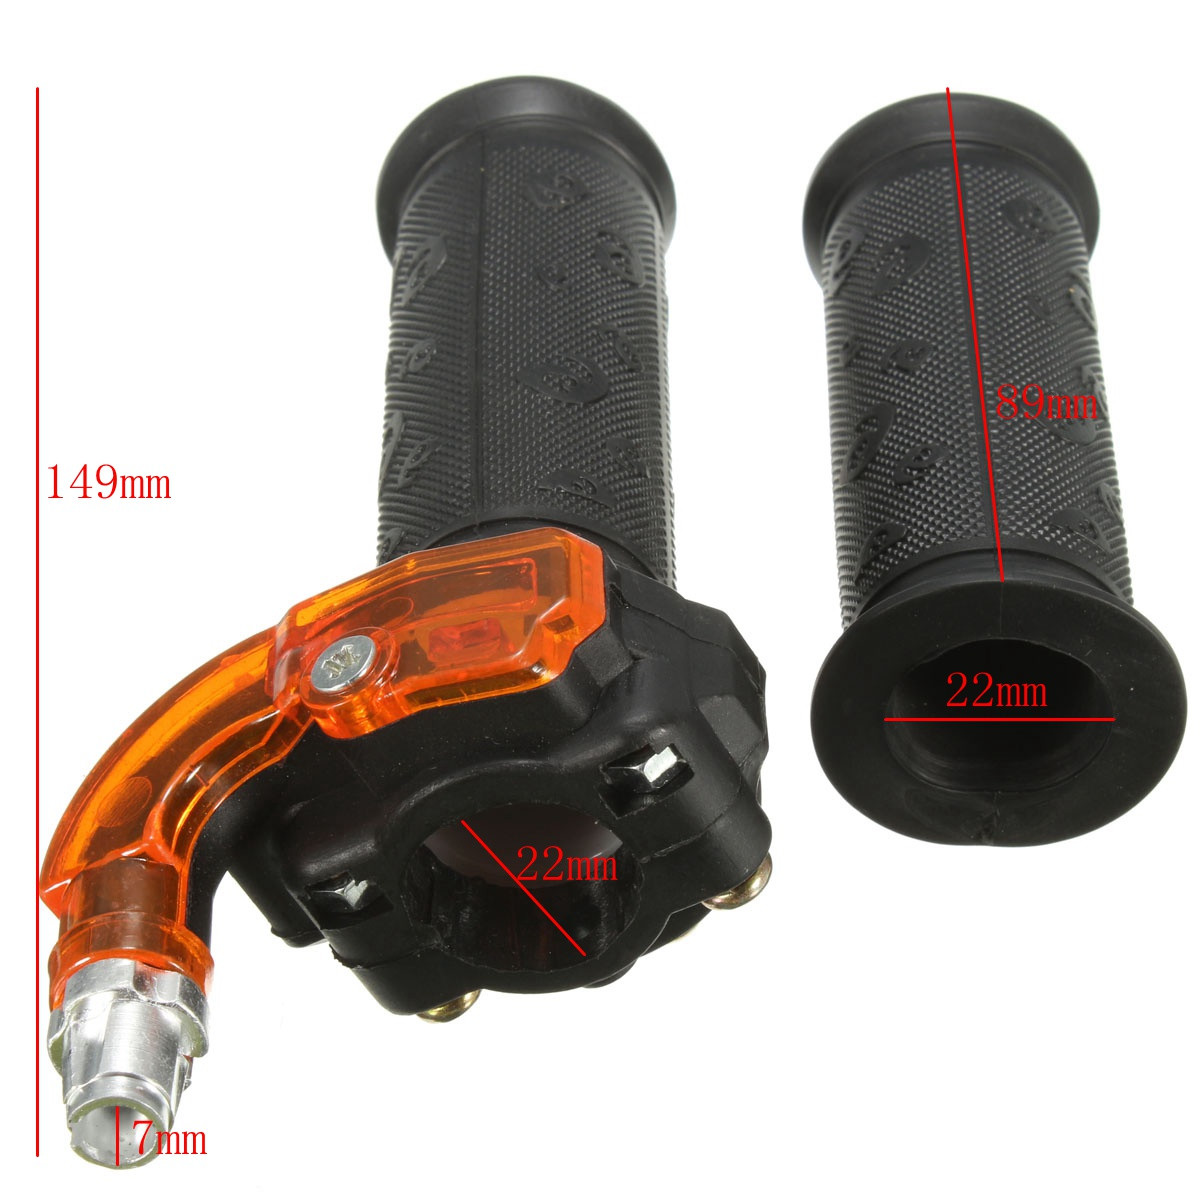 Hand Grips Twist Throttle Cable Brake Levers for 110-125cc ATV Pocket Bike